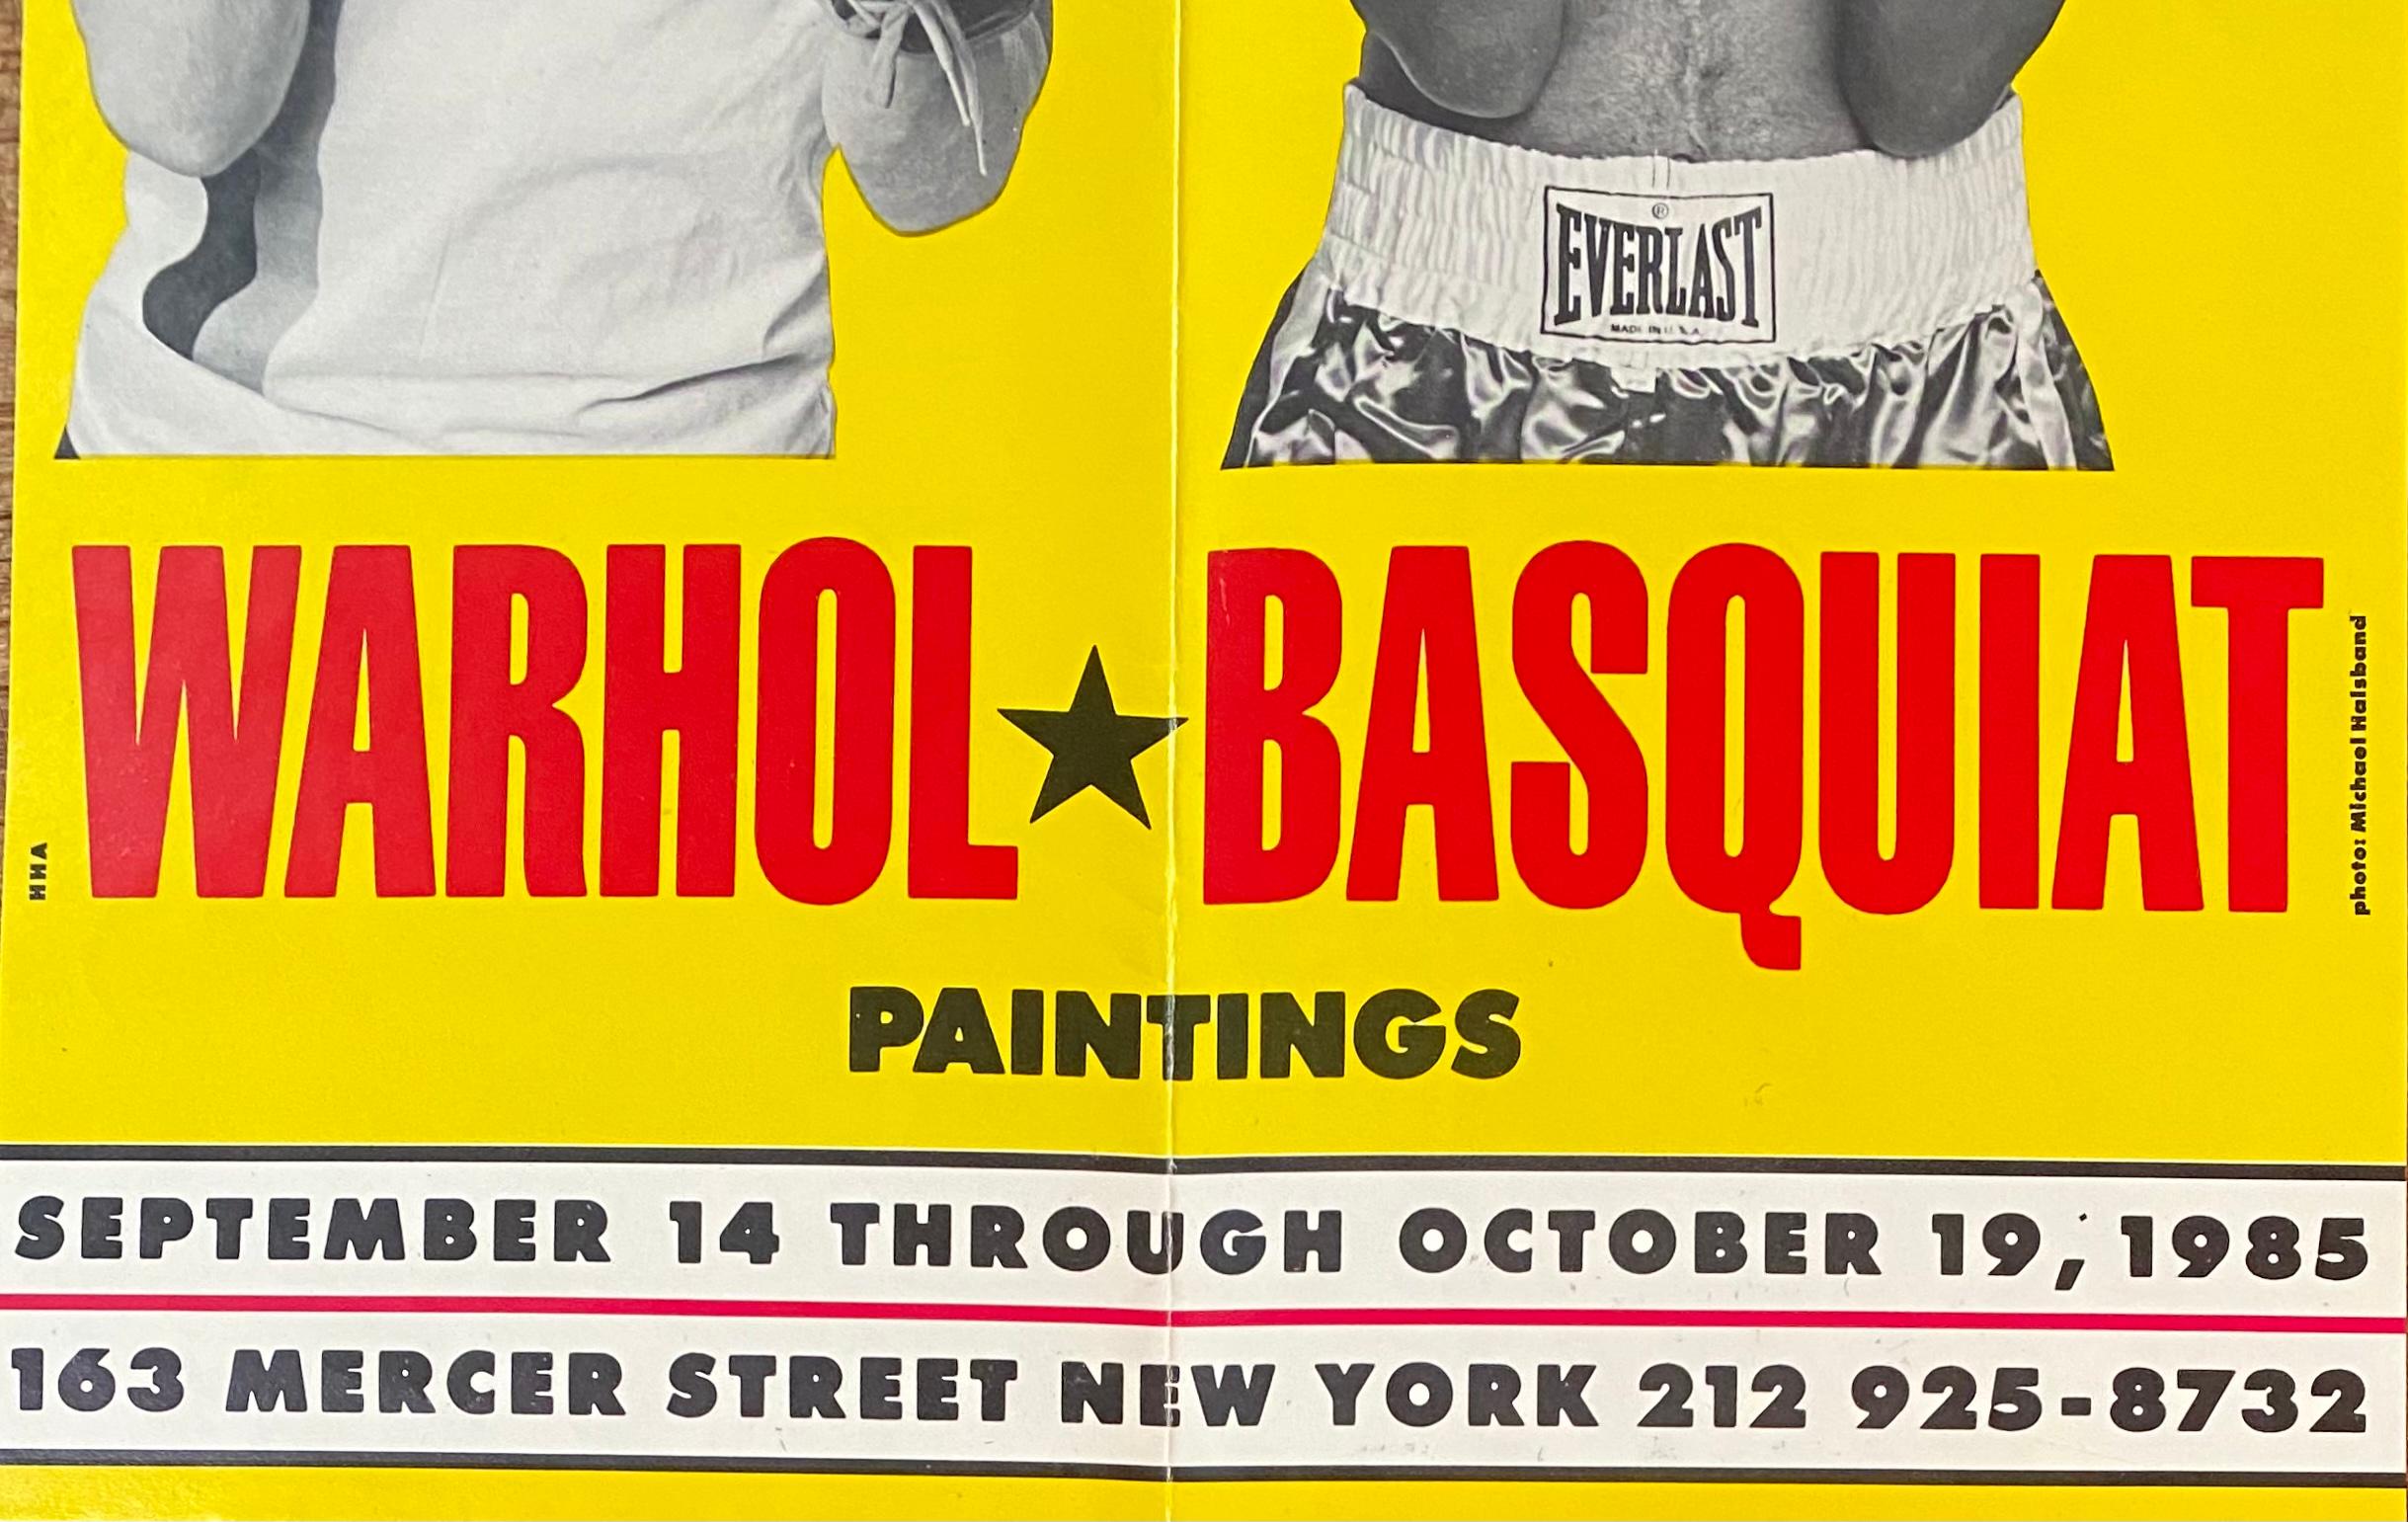 Signed Warhol Basquiat Boxing Poster 1985 (Warhol Basquiat collaborations) - Pop Art Print by Michael Halsband